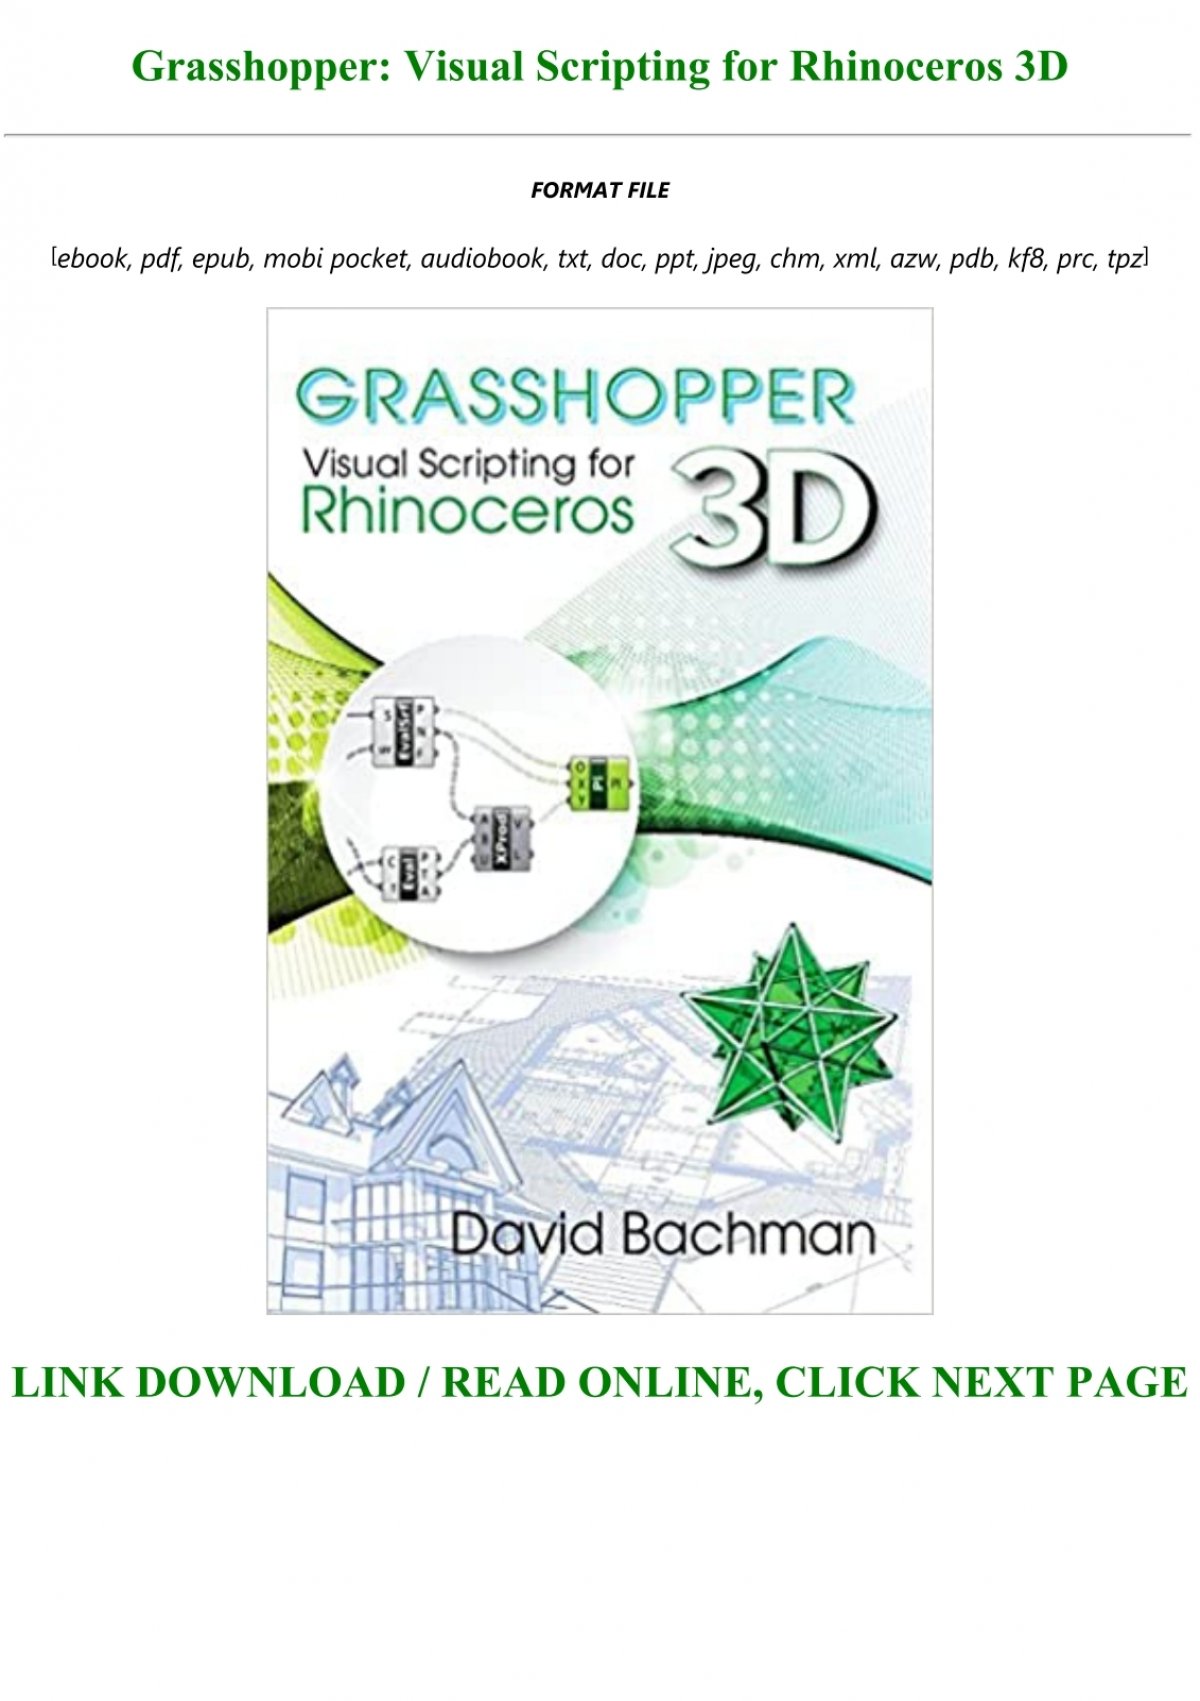 grasshopper visual scripting for rhinoceros 3d pdf download